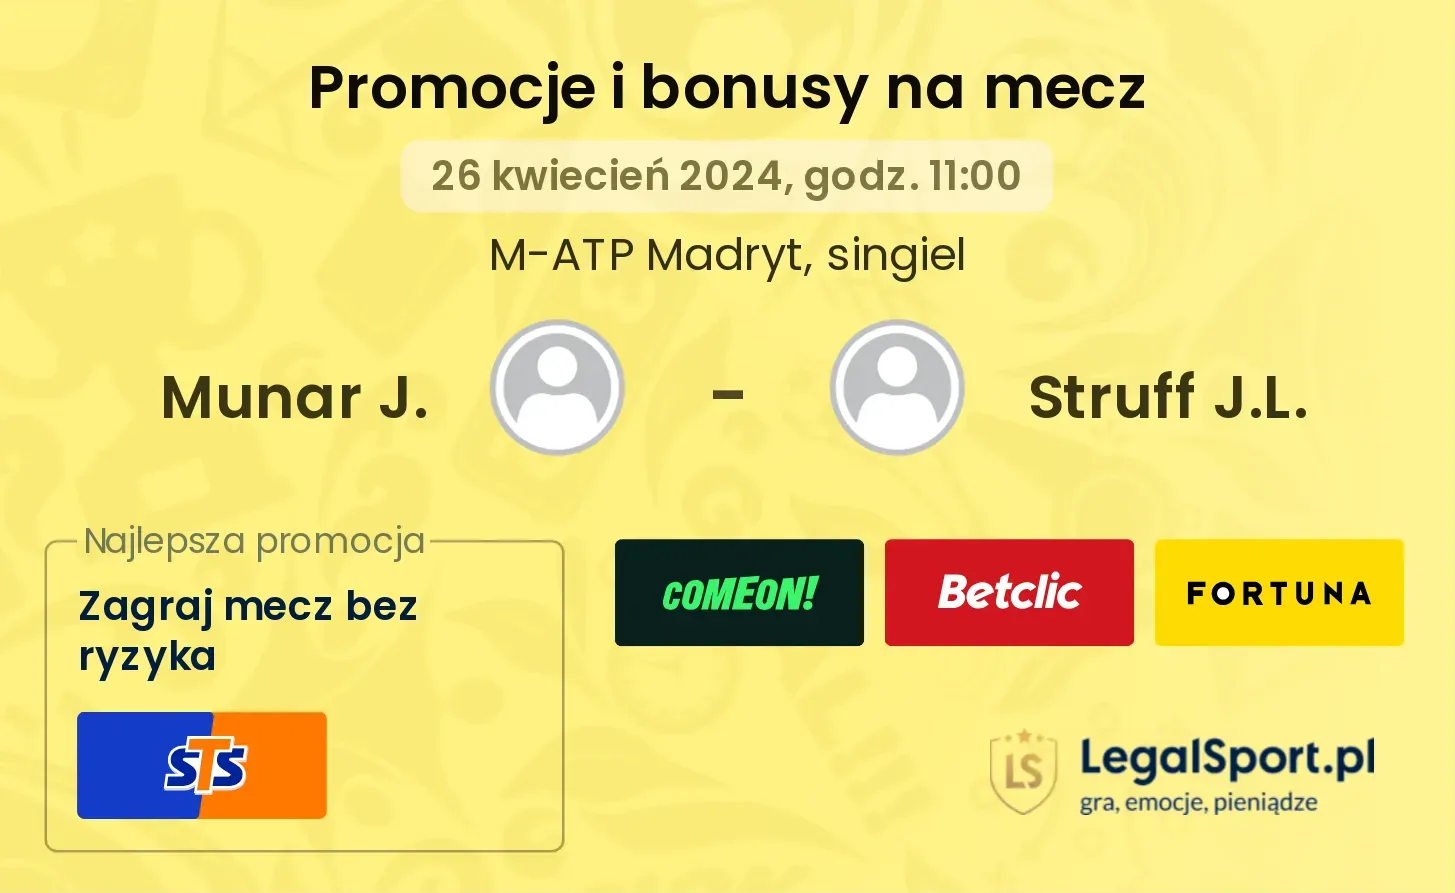 Munar J. - Struff J.L. promocje bonusy na mecz